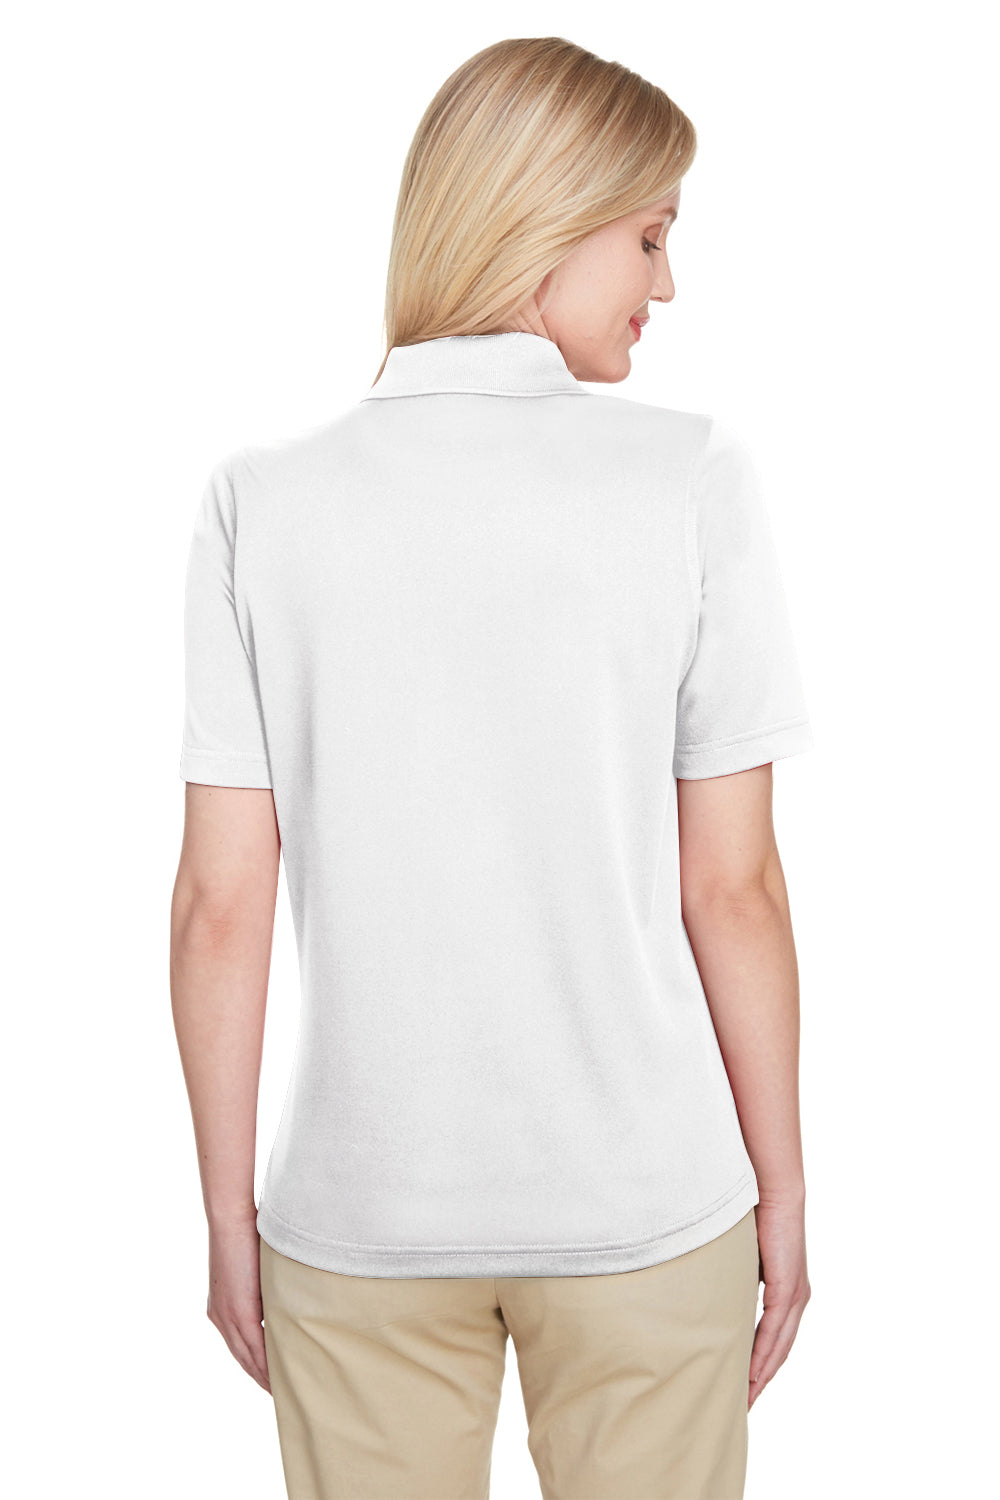 Harriton M348W Womens Advantage Performance Moisture Wicking Short Sleeve Polo Shirt White Back